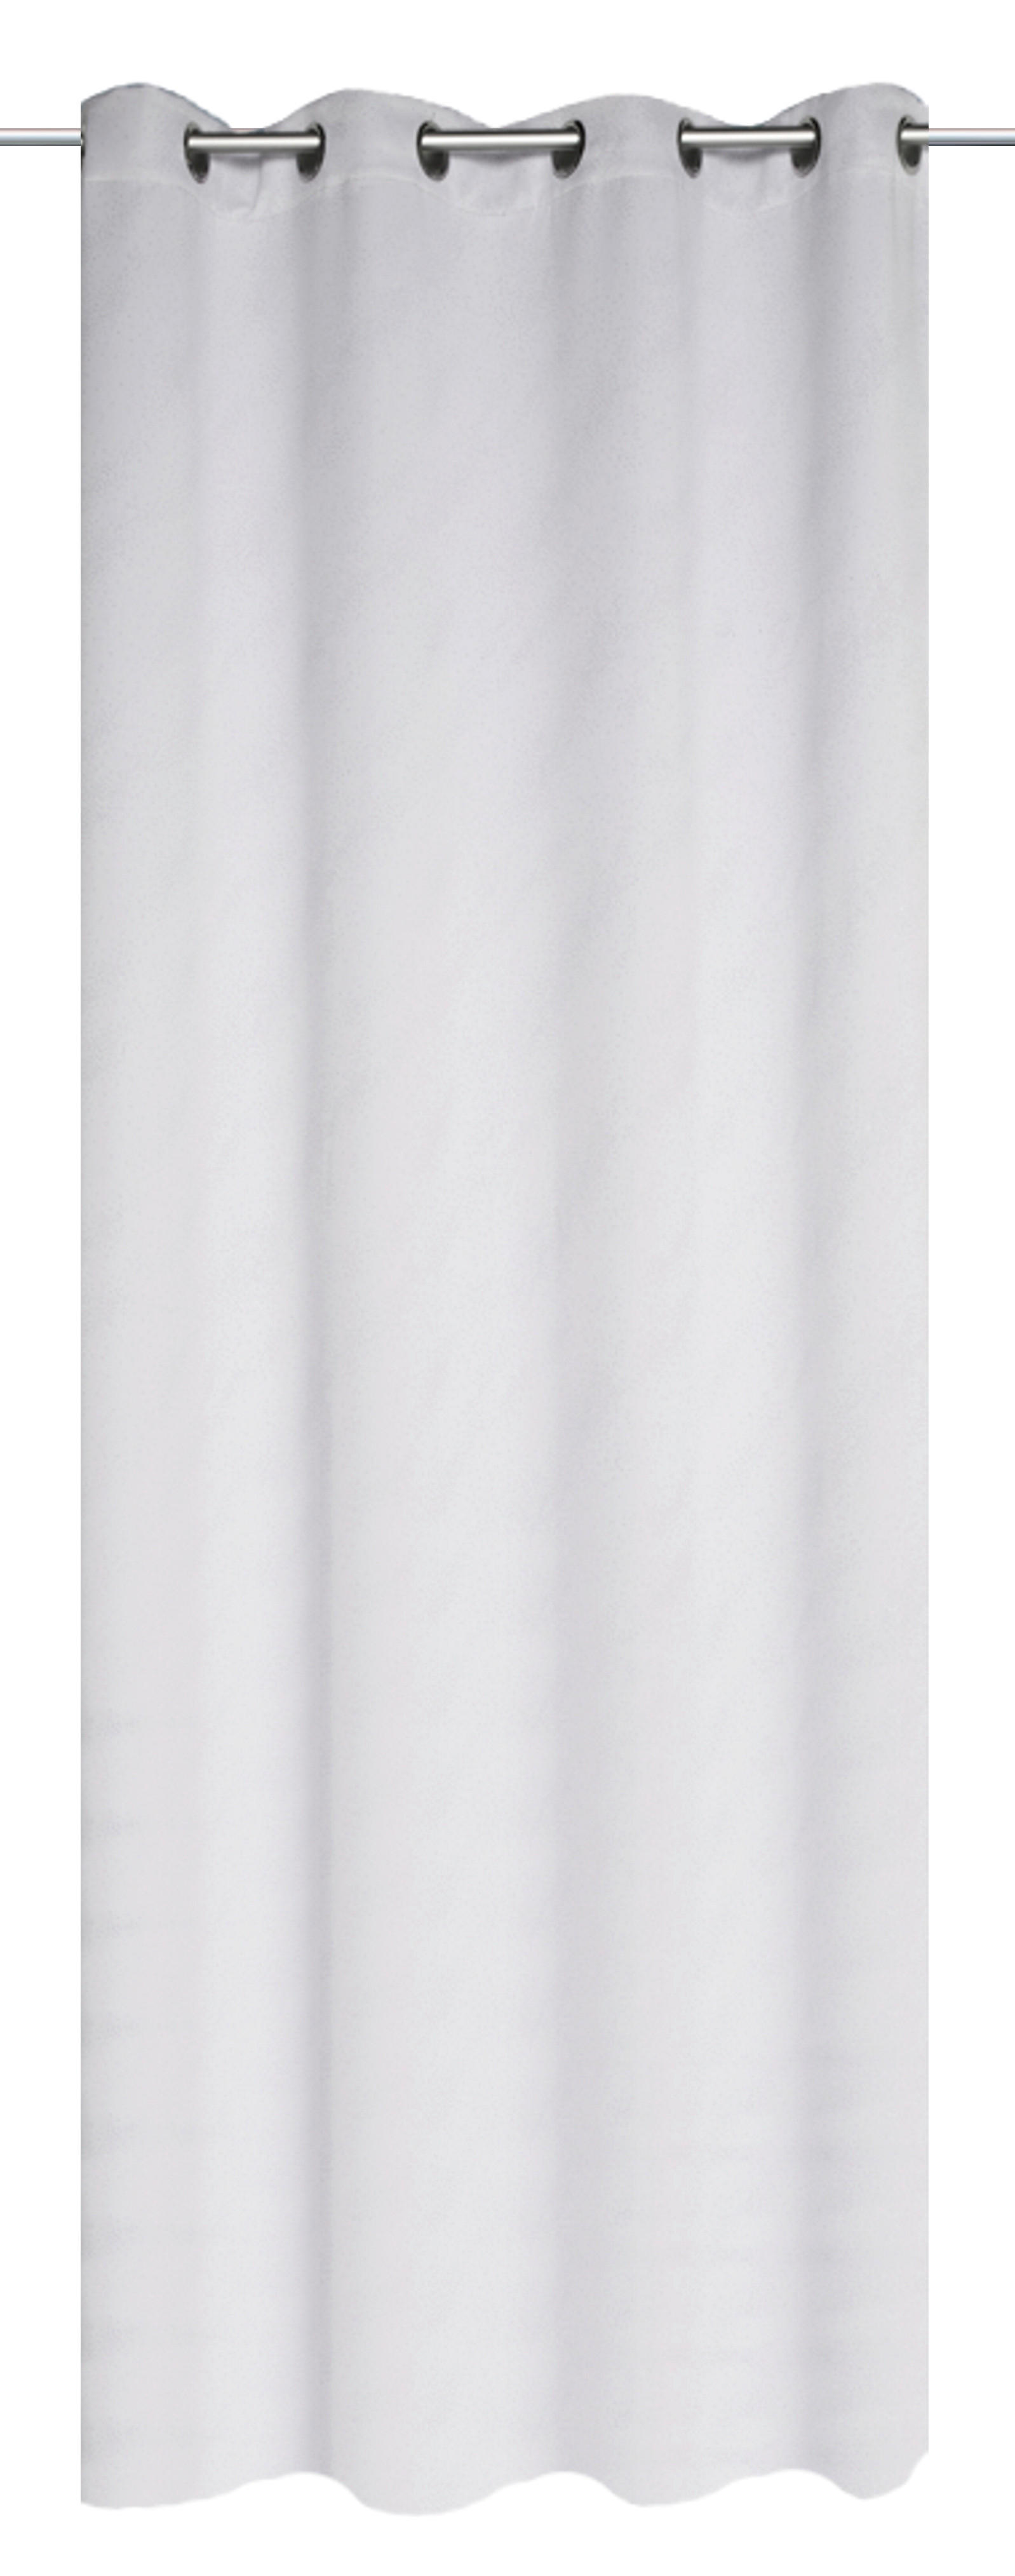 ÖSENSCHAL GALAXY blickdicht 135/245 cm   - Weiß, Basics, Textil (135/245cm)